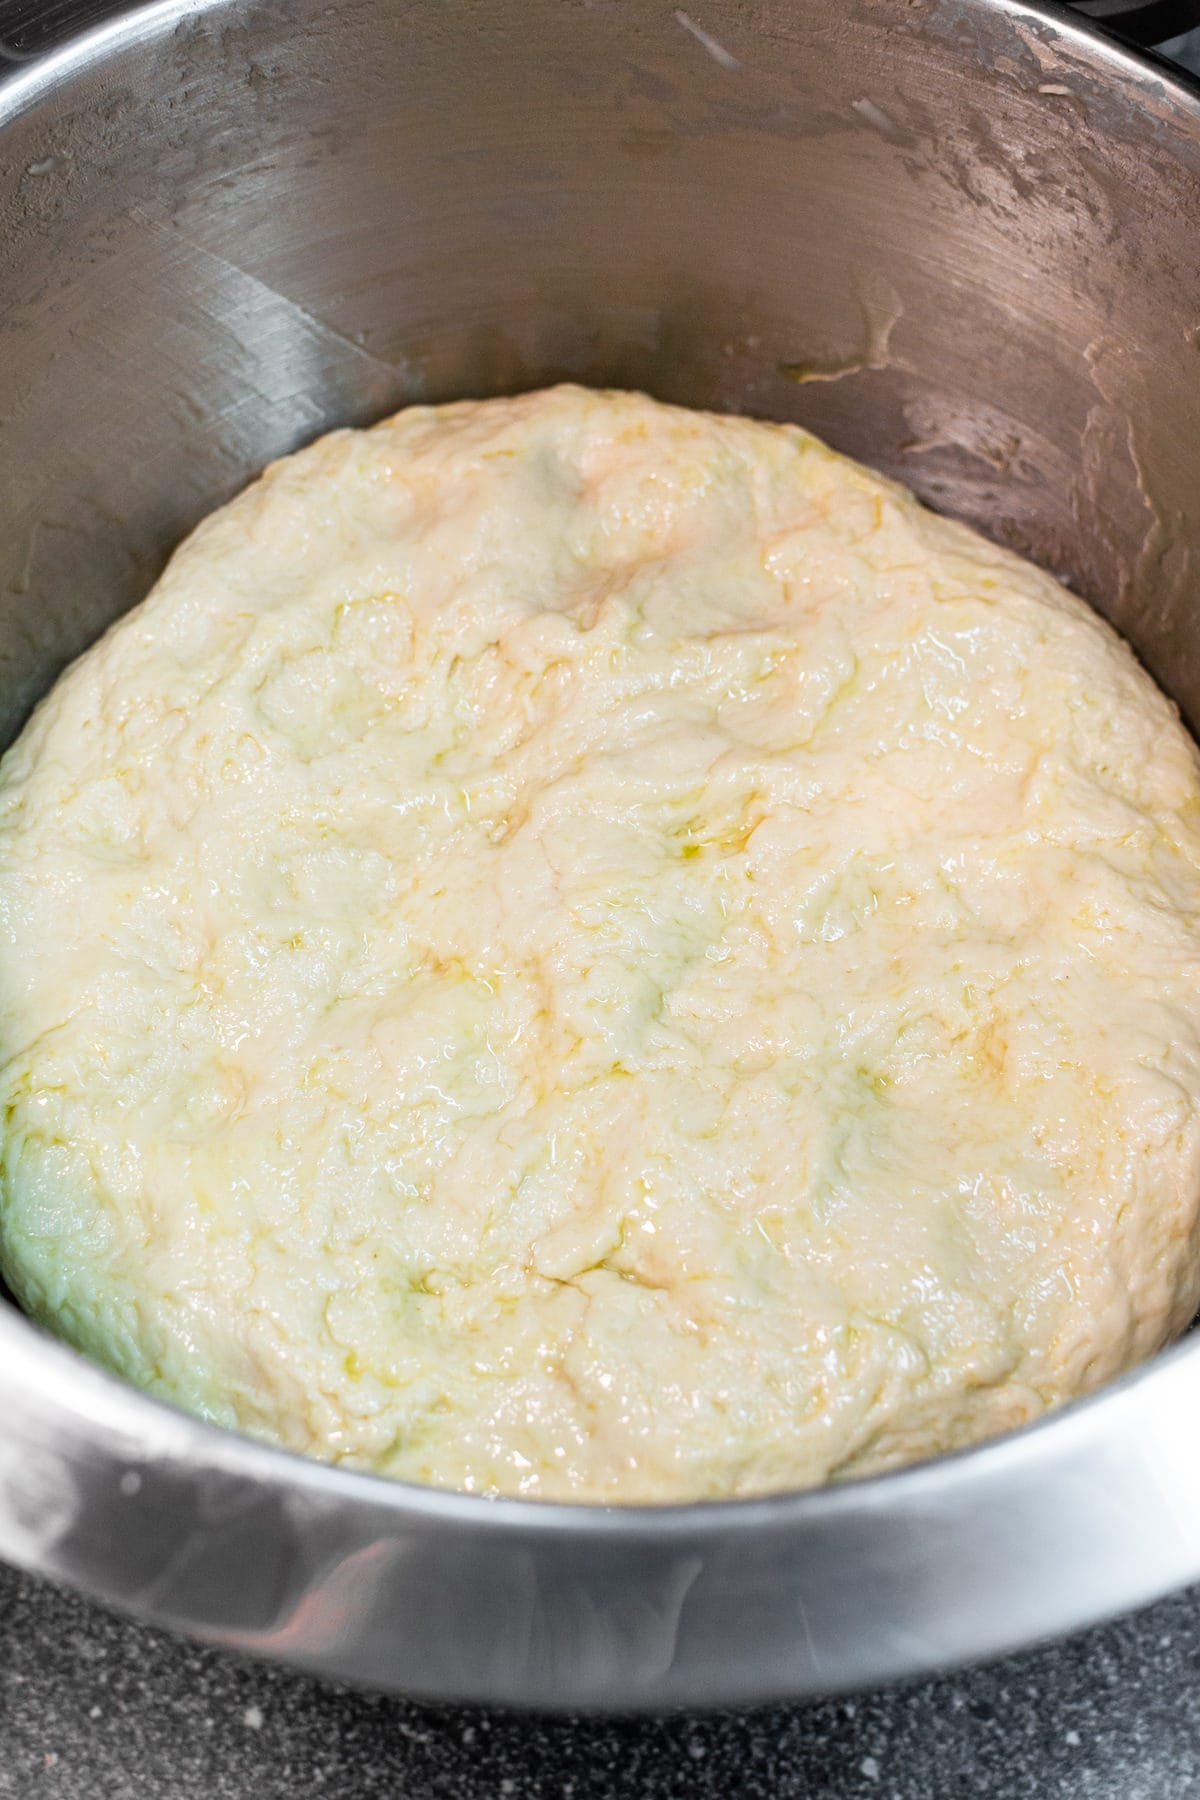 Kneaded dough in a metal bowl.